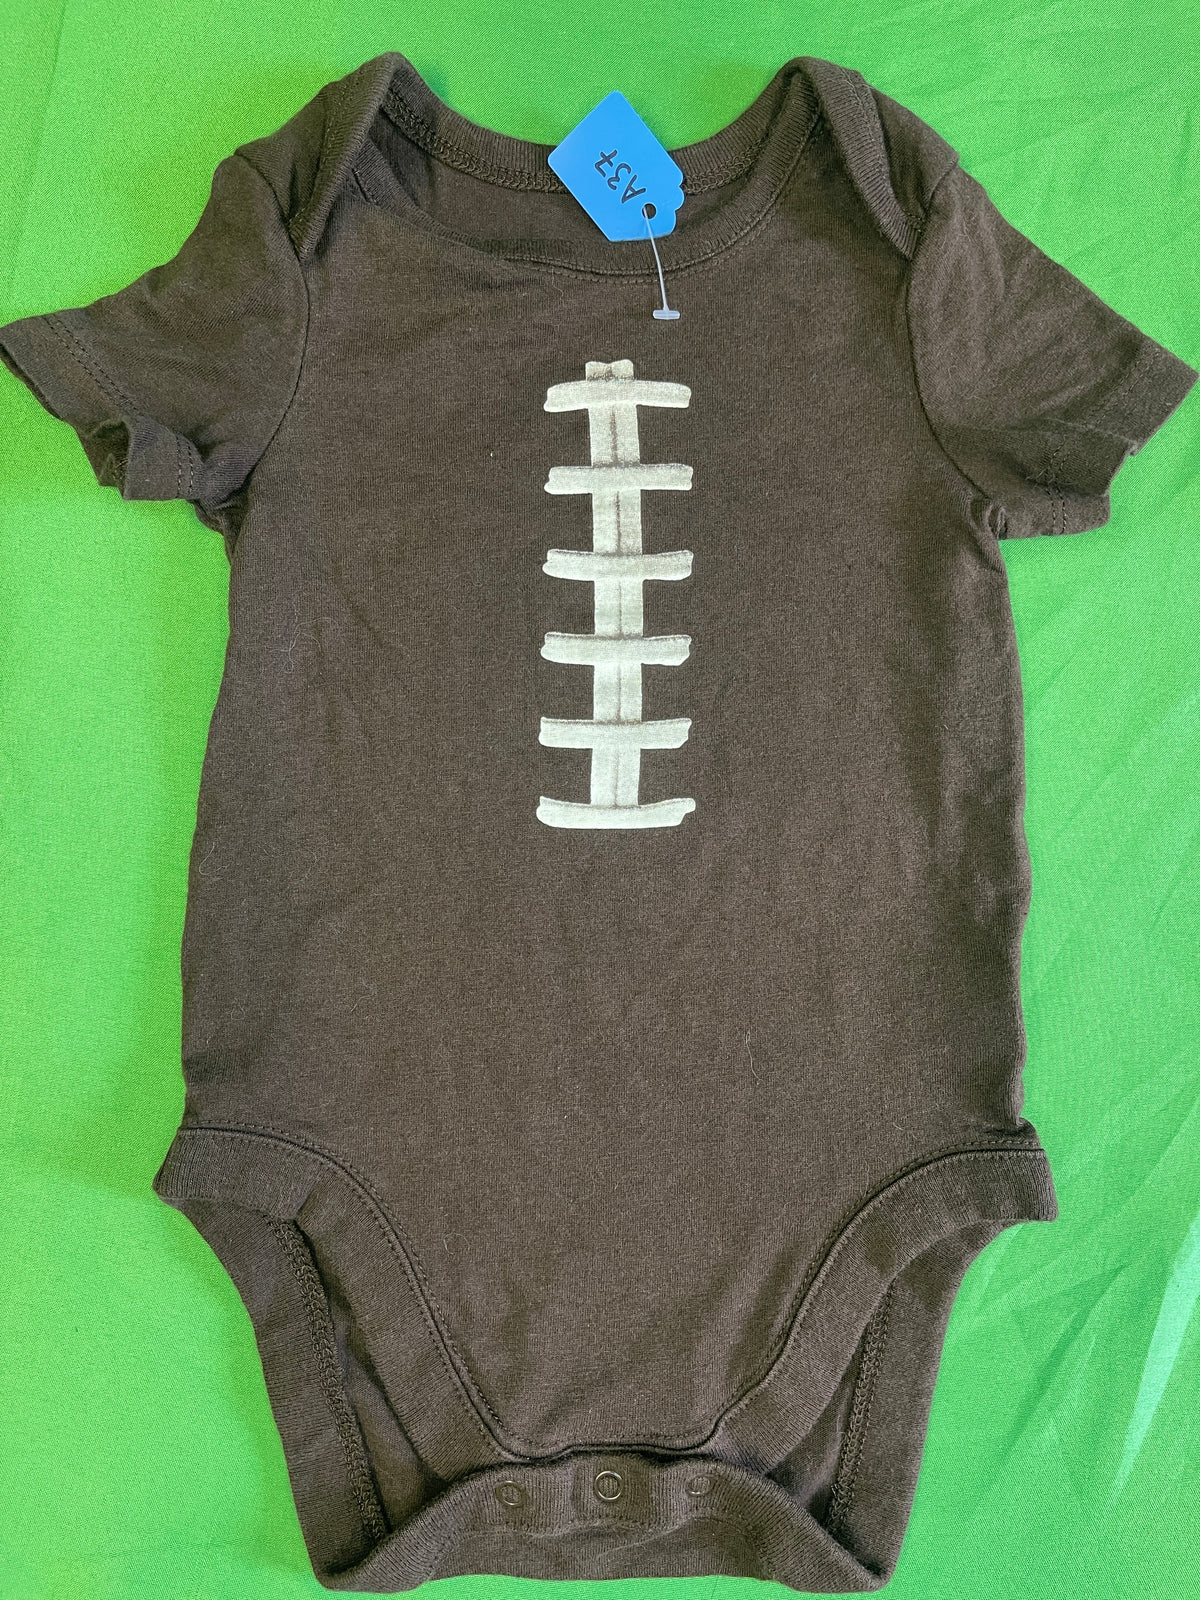 American Football Pigskin Style Bodysuit/Vest Infant Baby 3-6 Months